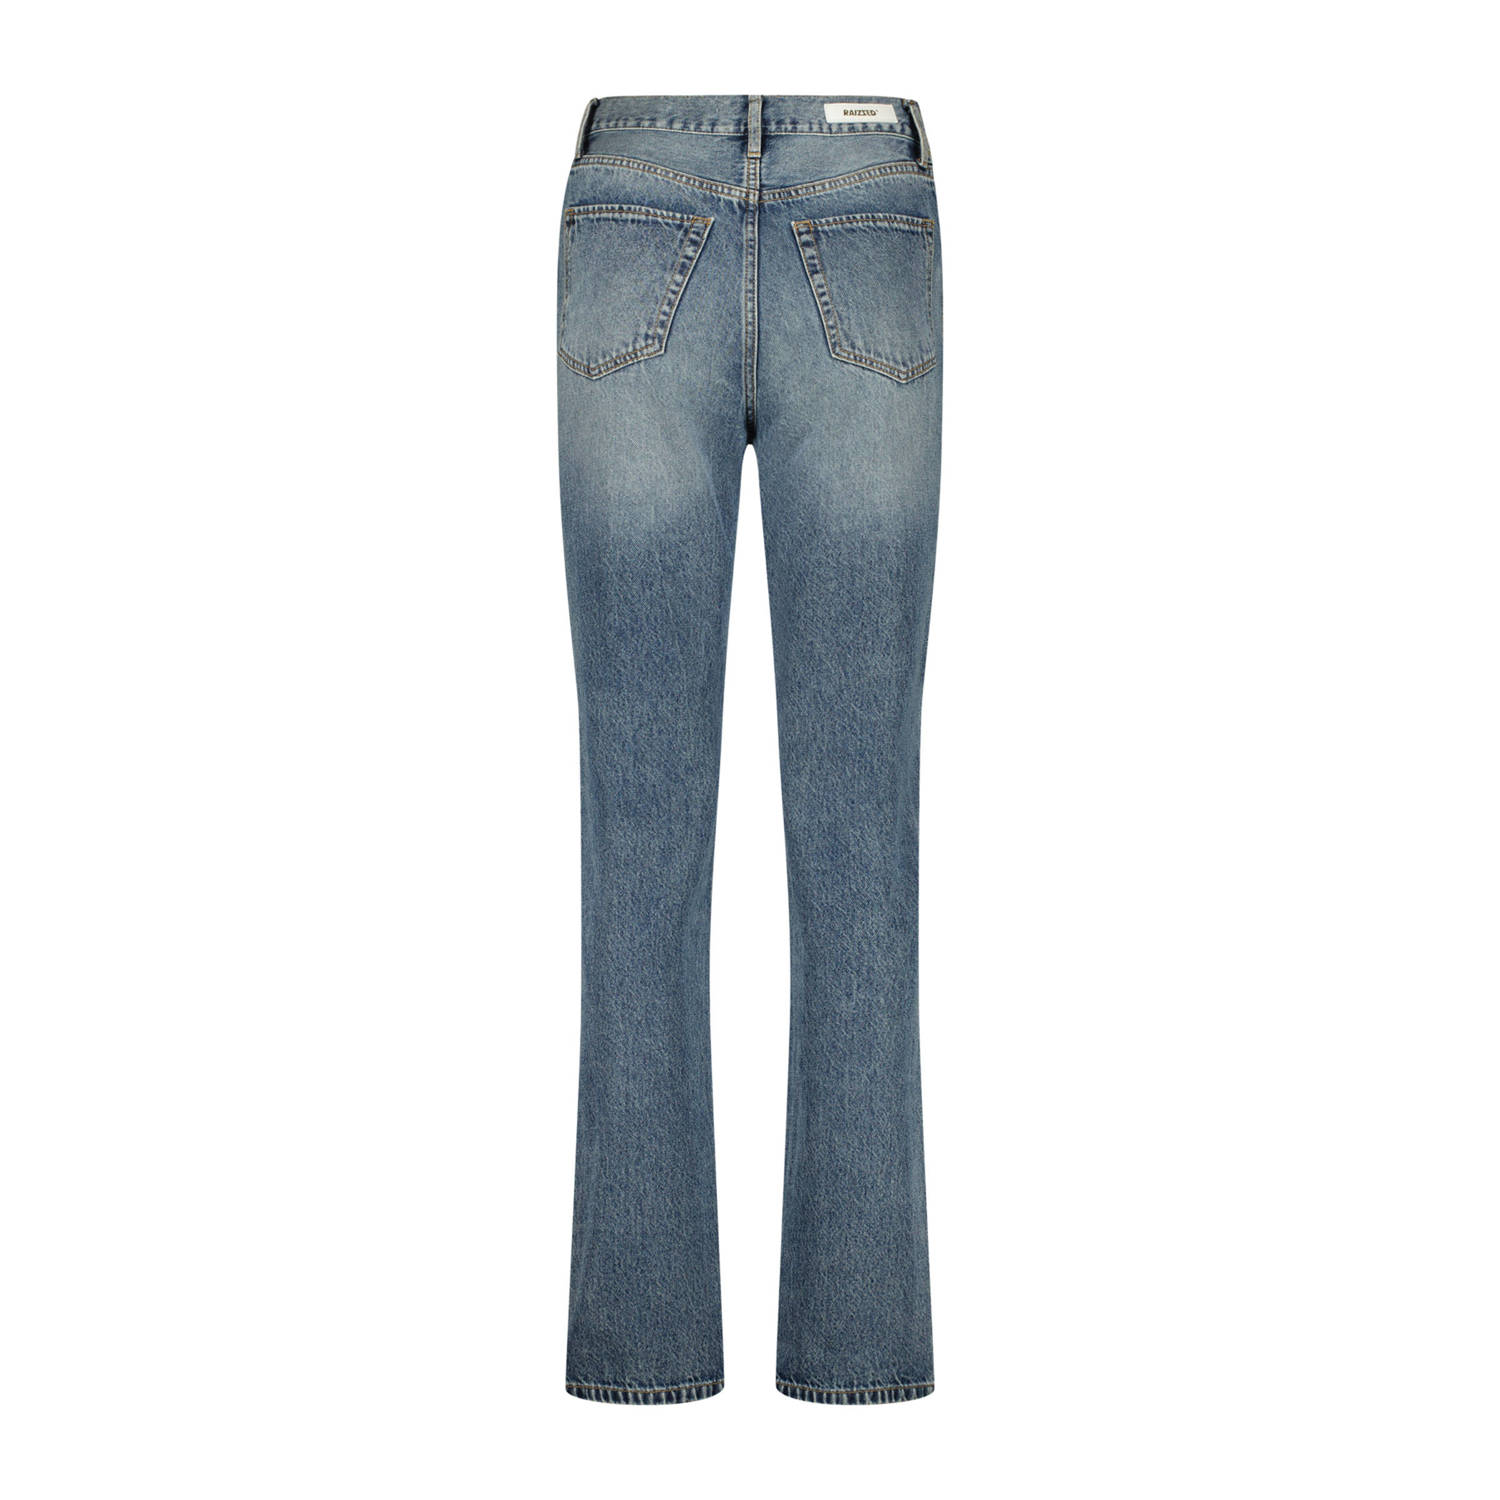 Raizzed straight jeans dark blue denim